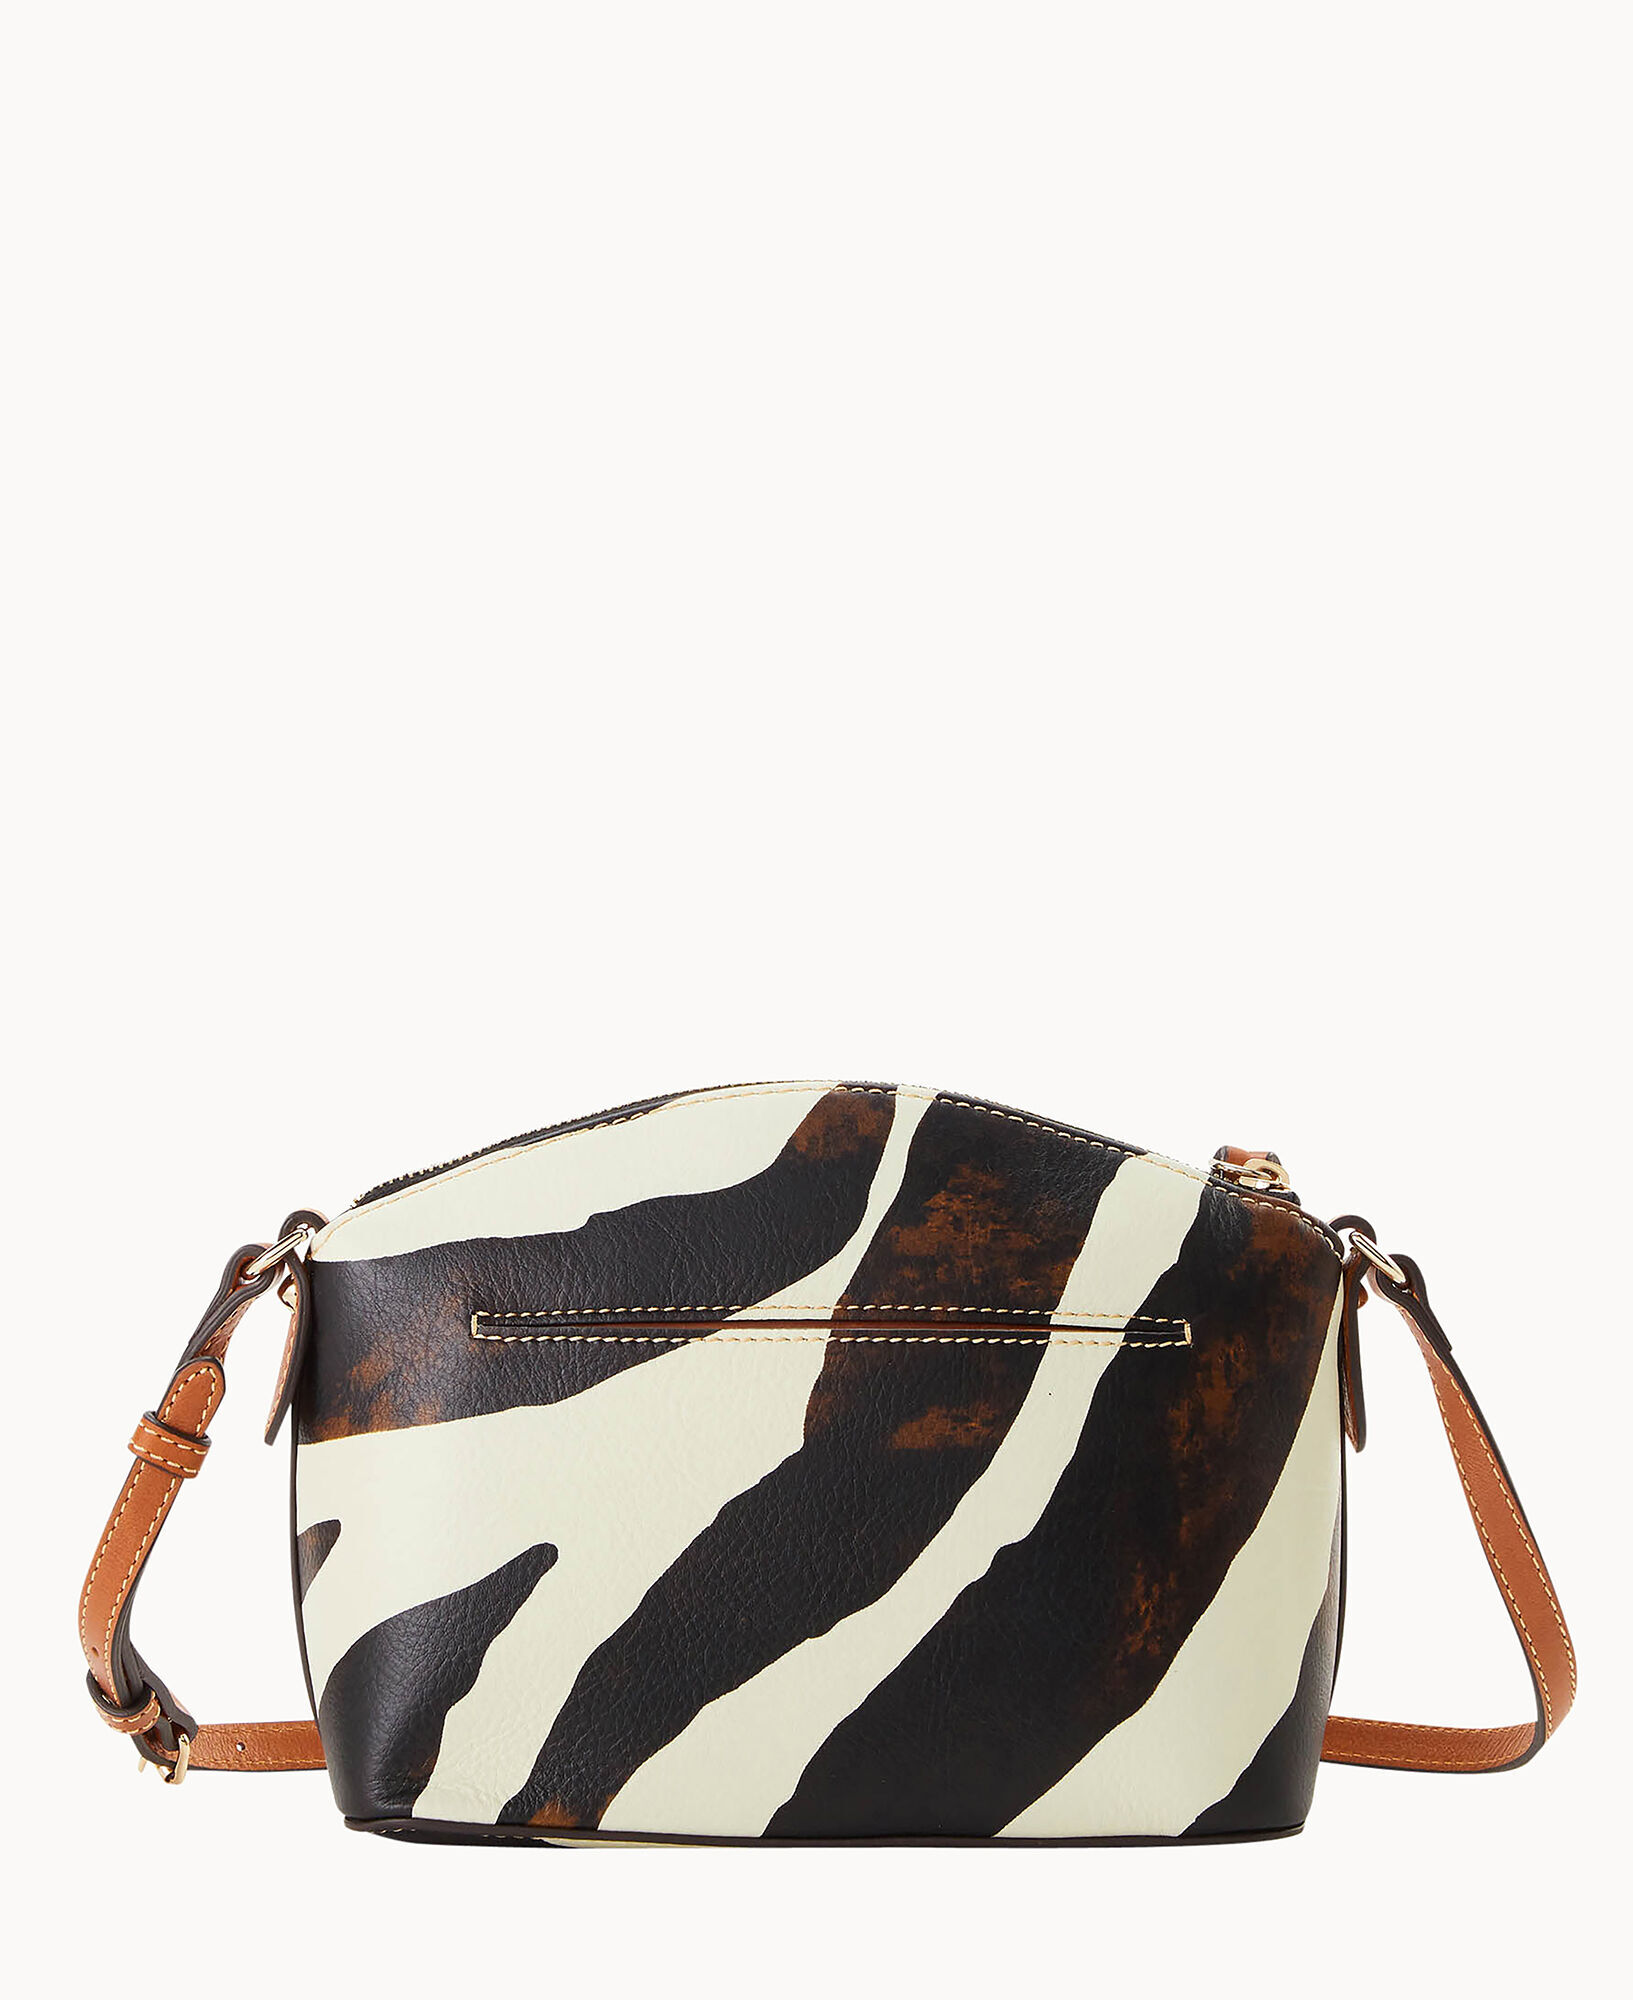 Dooney & Bourke Zebra Printed Domed Satchel Bag